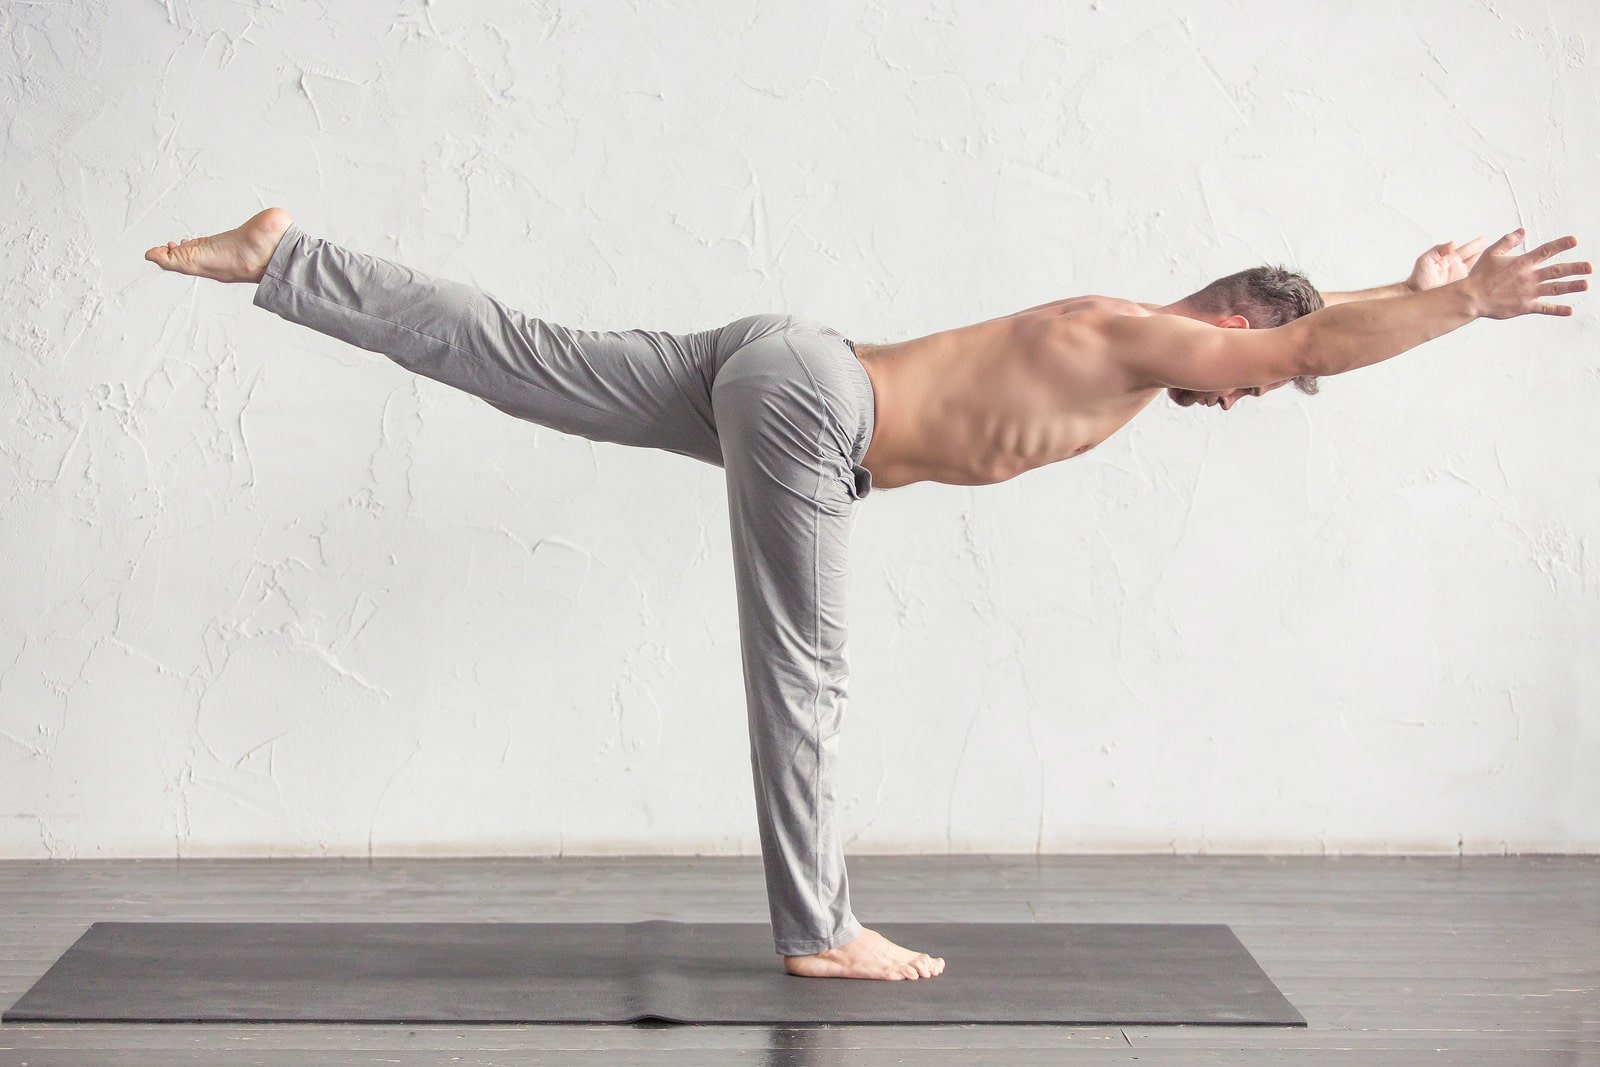 A-man-doing-yoga-exercises